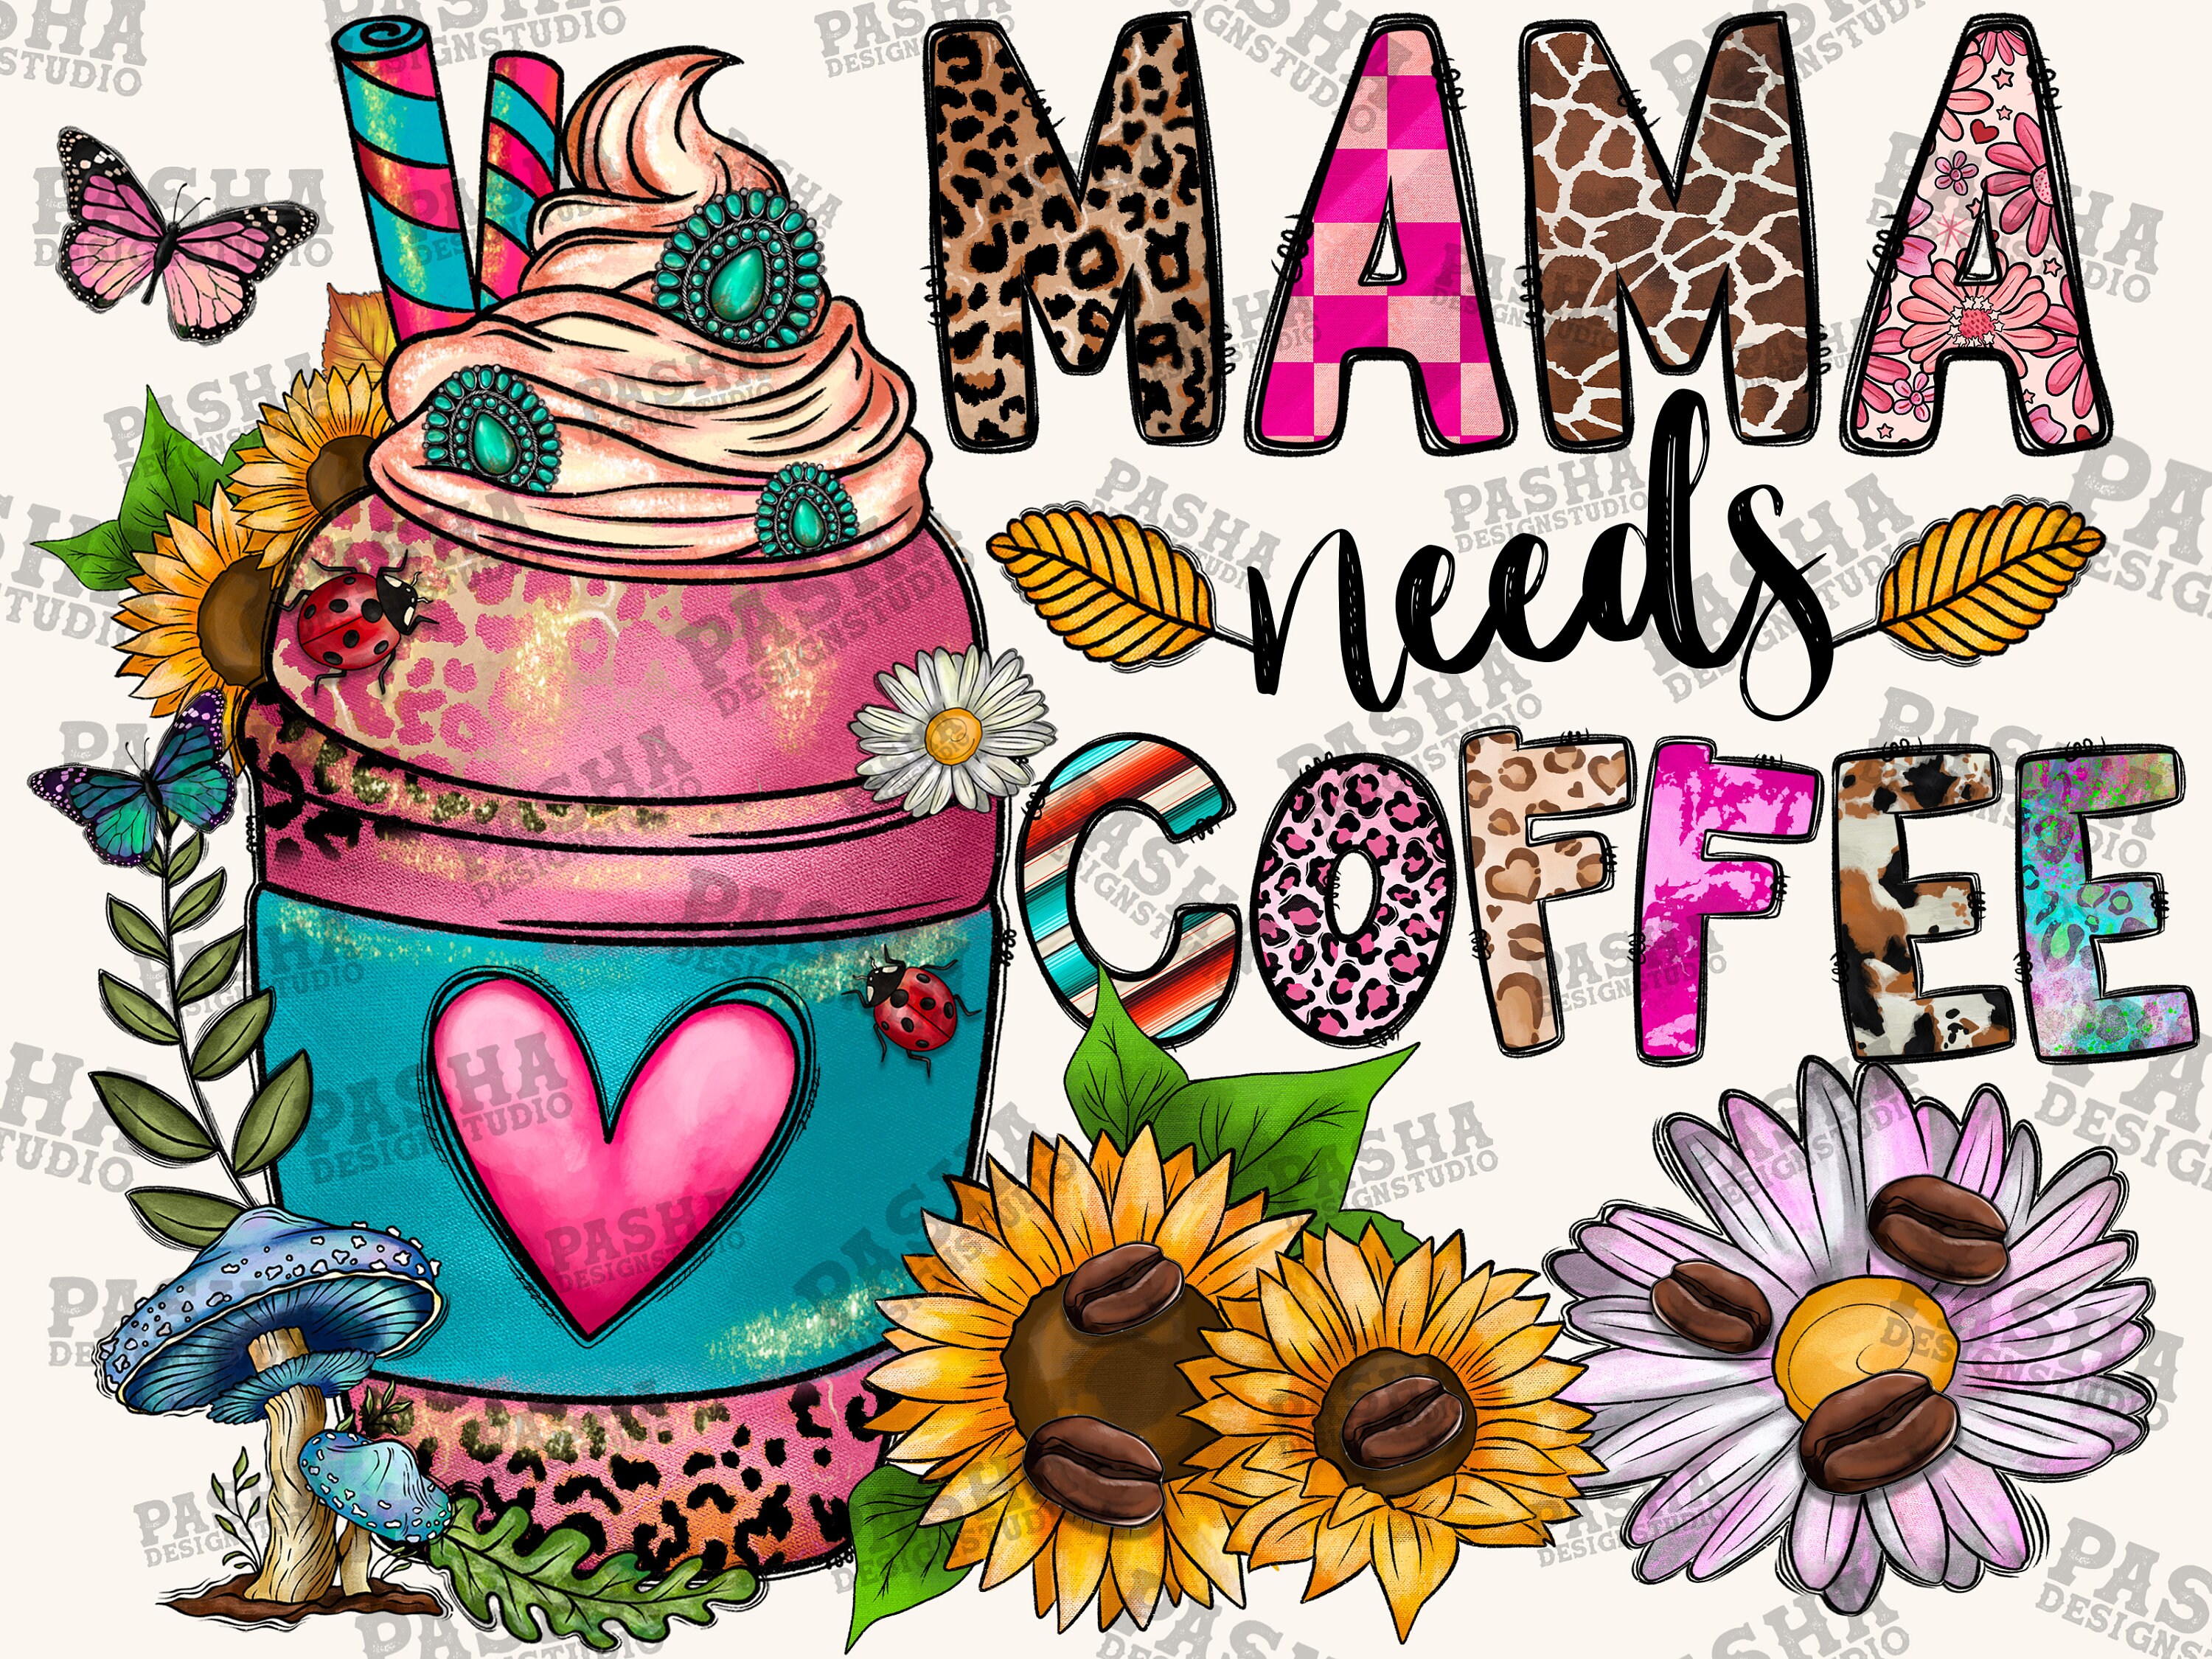 Mama Needs Coffee Embroidery Design